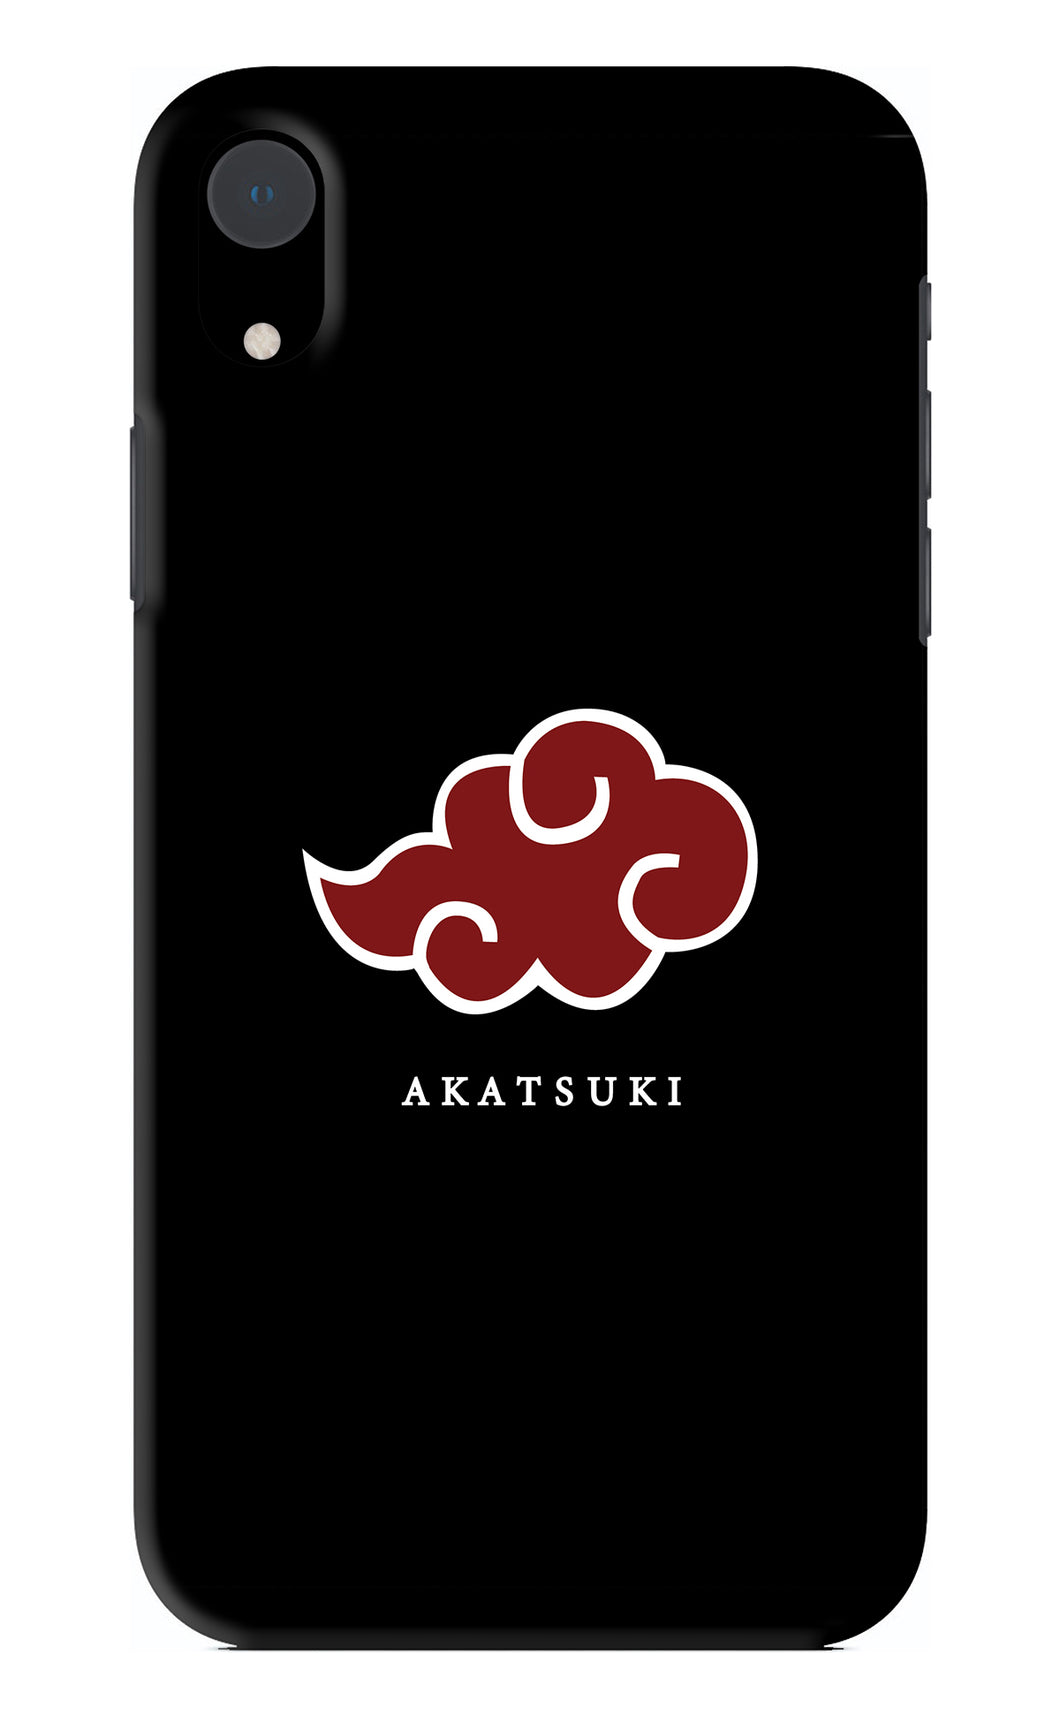 Akatsuki 1 iPhone XR Back Skin Wrap